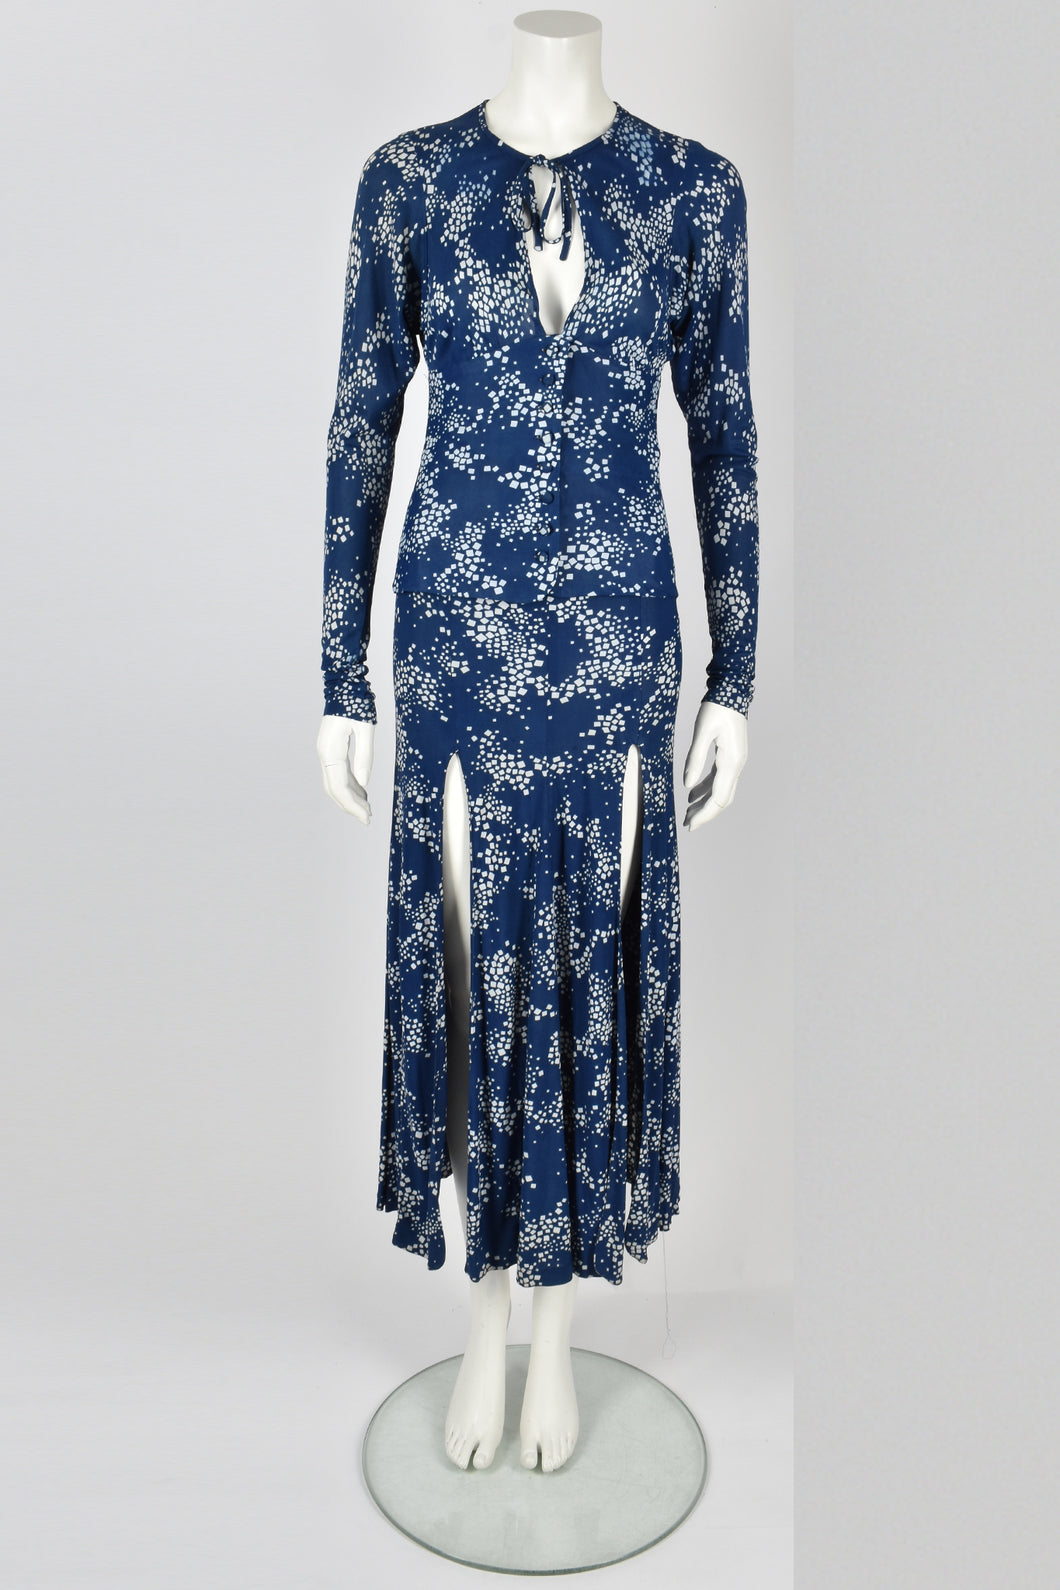 BIBA blue patterned top and skirt set